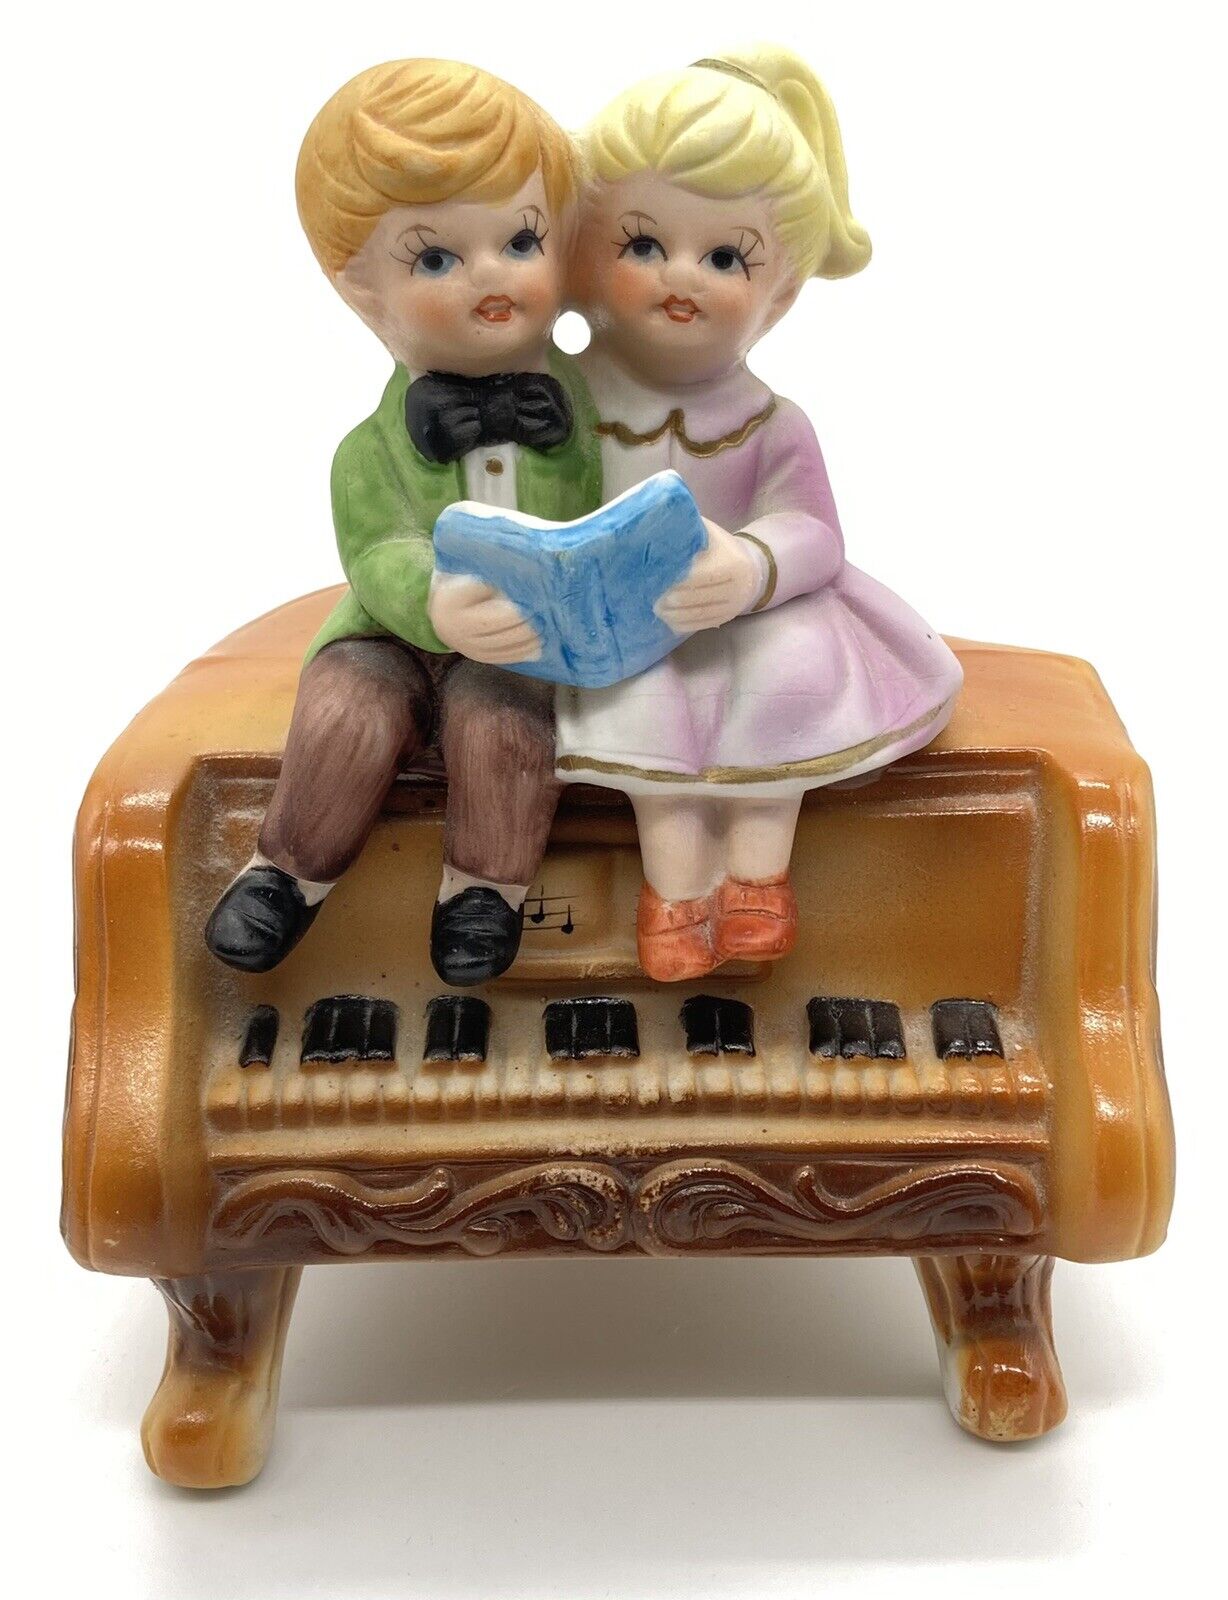 Vintage TOYO Porcelain Bisque Music Box Figurine Boy Girl Piano The Way We Were